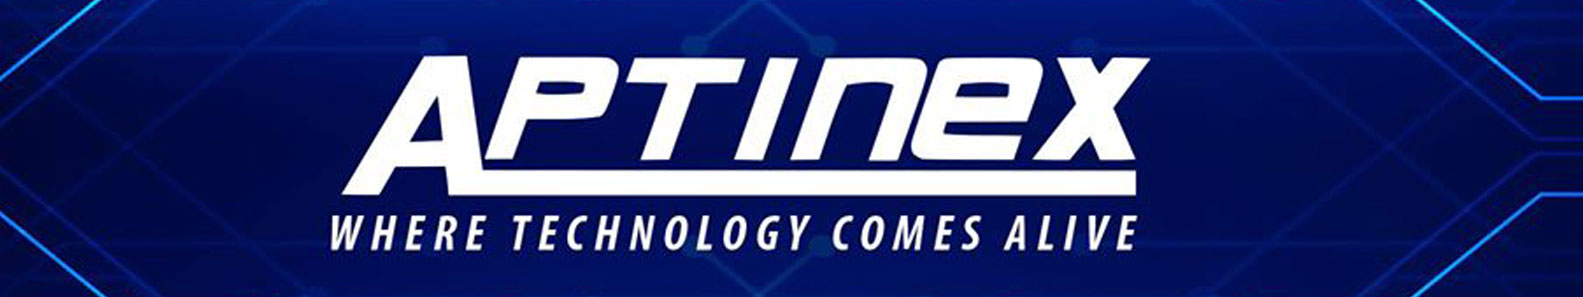 Aptinex (Pvt) Ltd